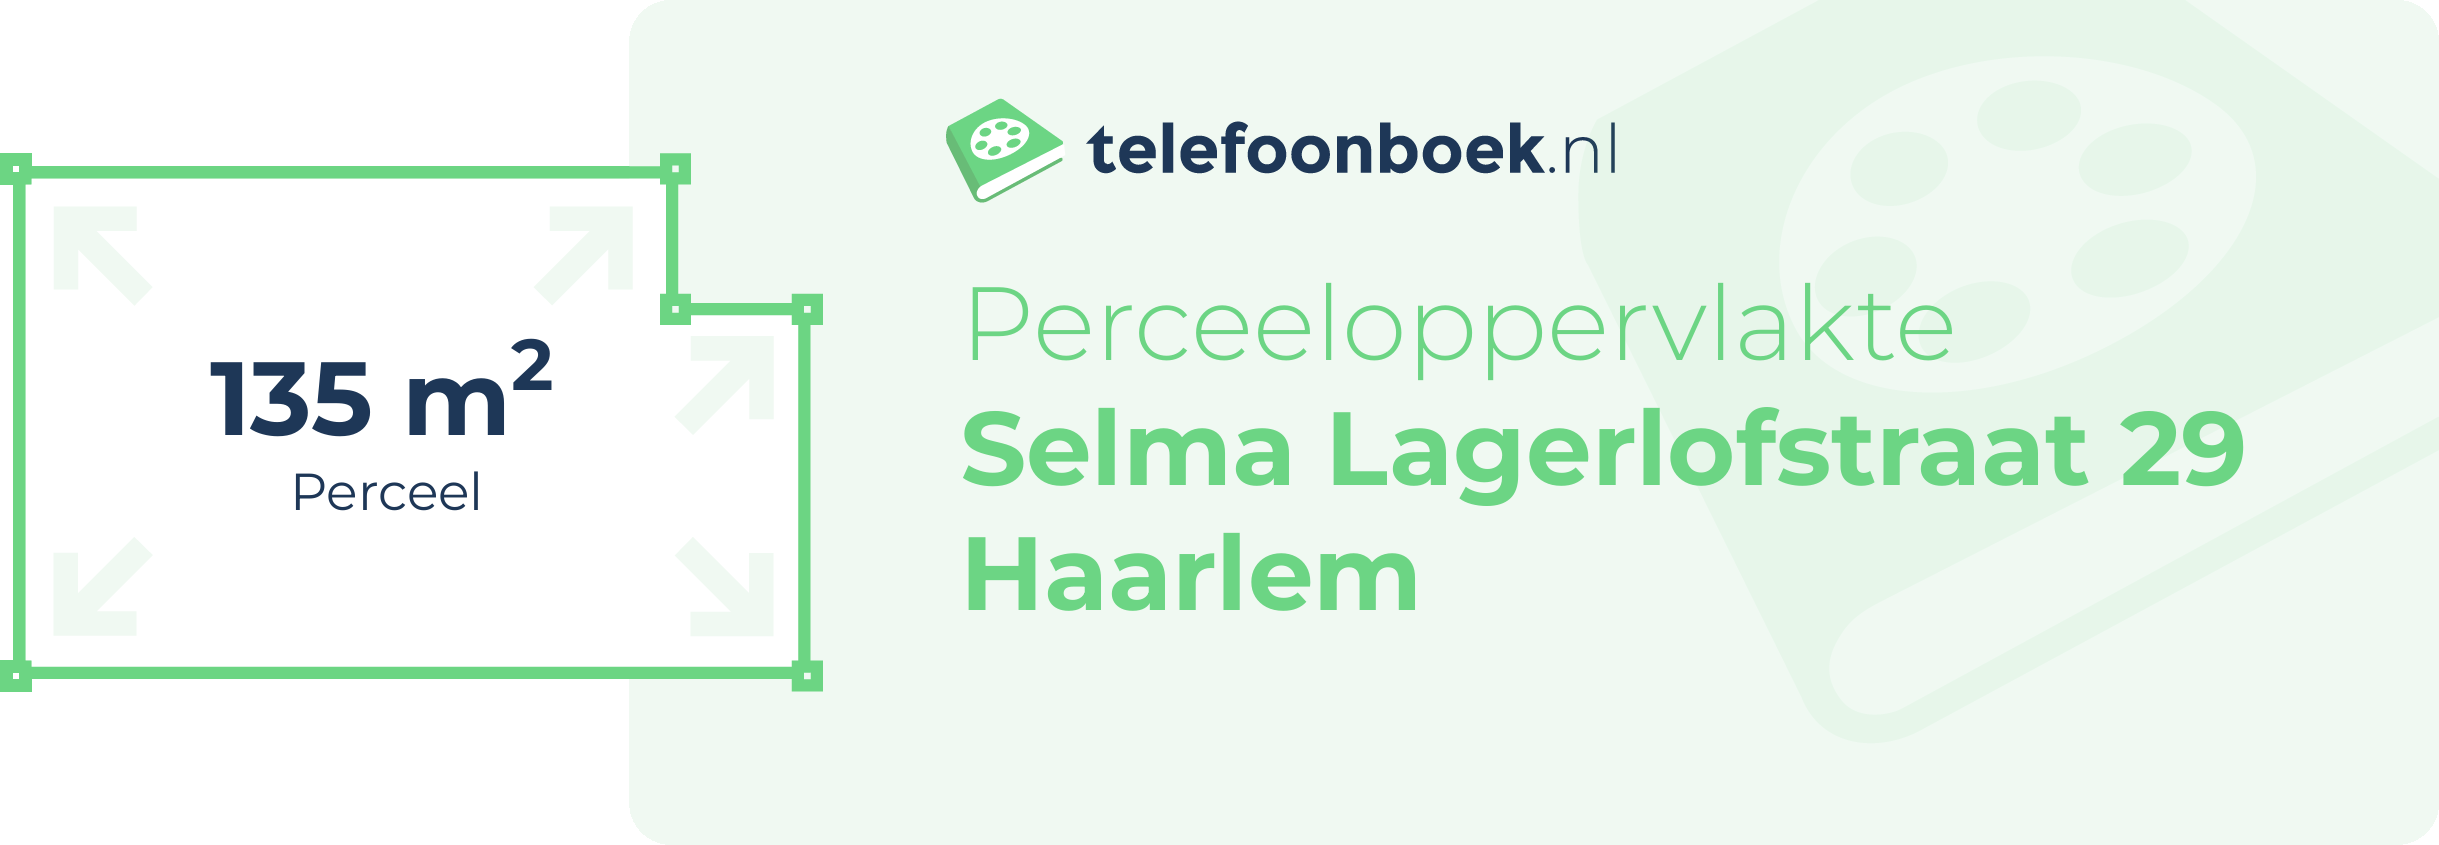 Perceeloppervlakte Selma Lagerlofstraat 29 Haarlem